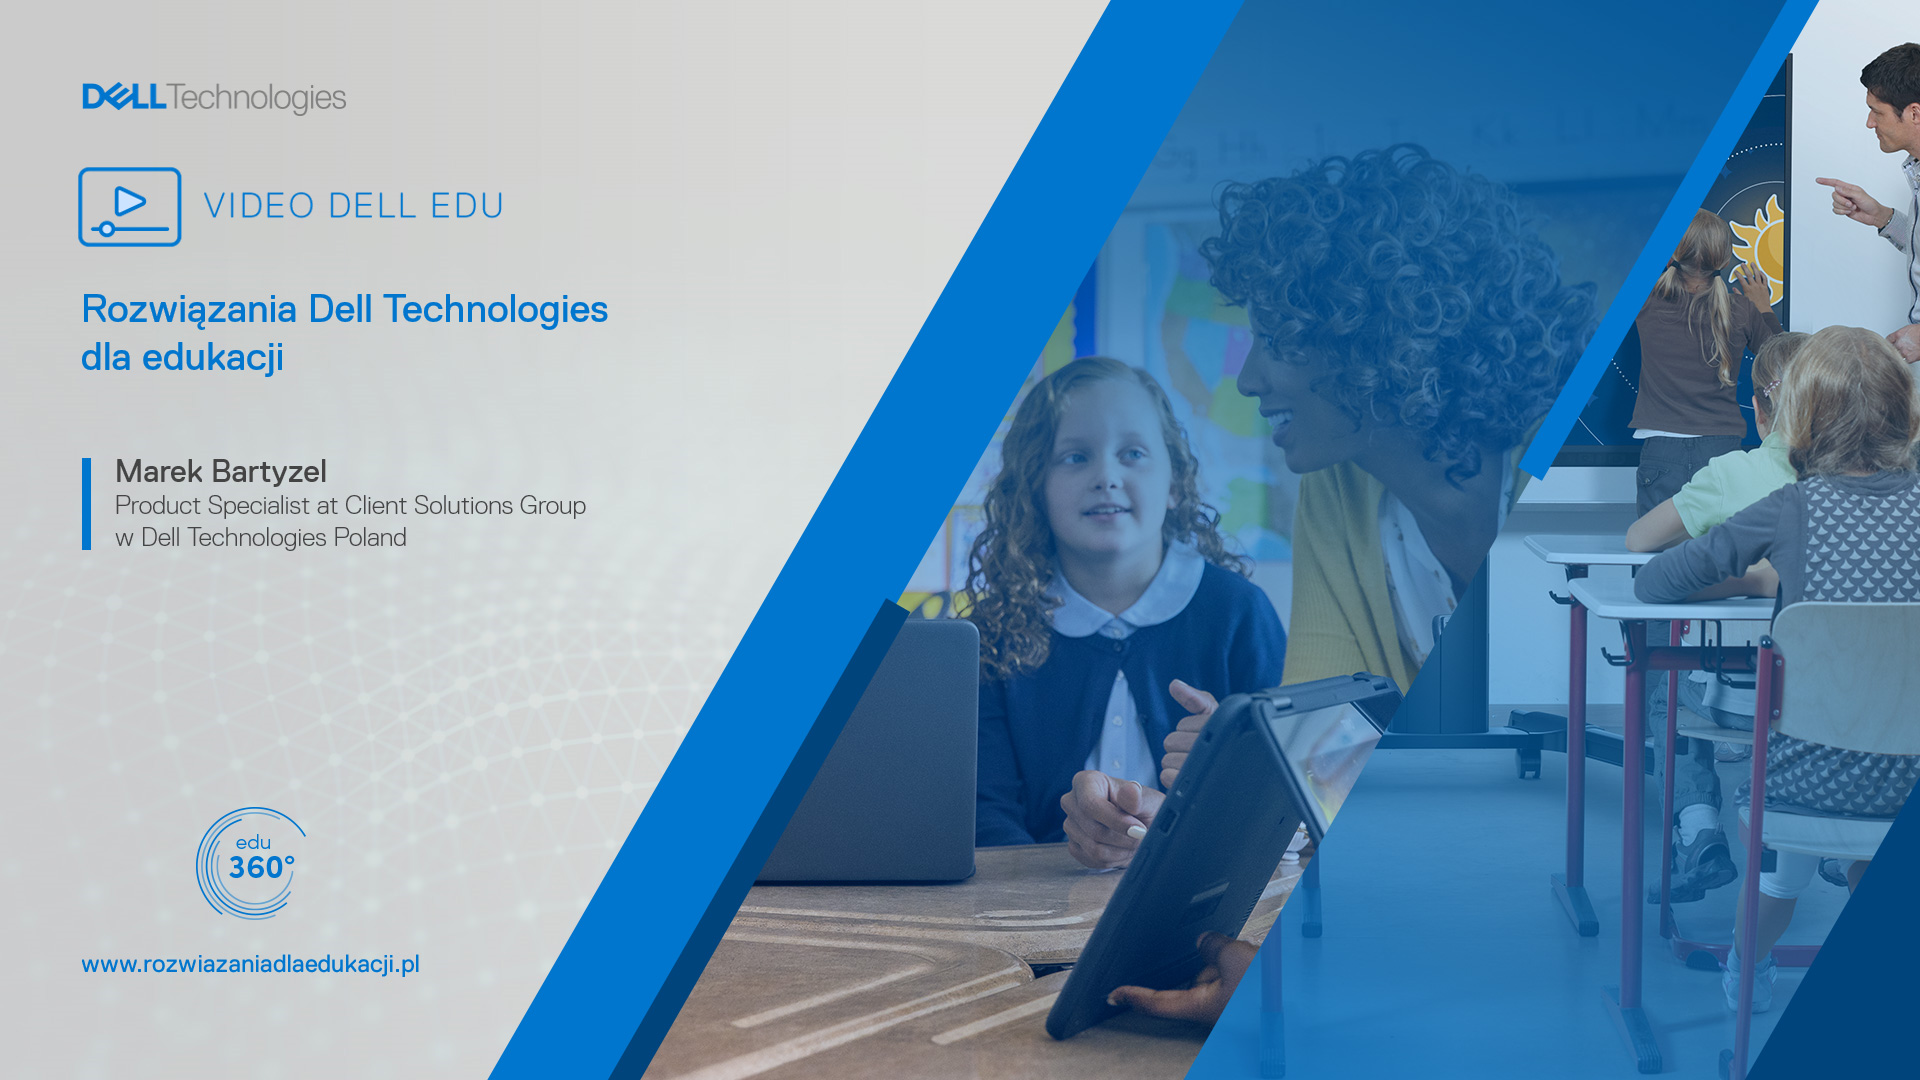 Video Dell EDU: Rozwiązania Dell Technologies dla edukacji